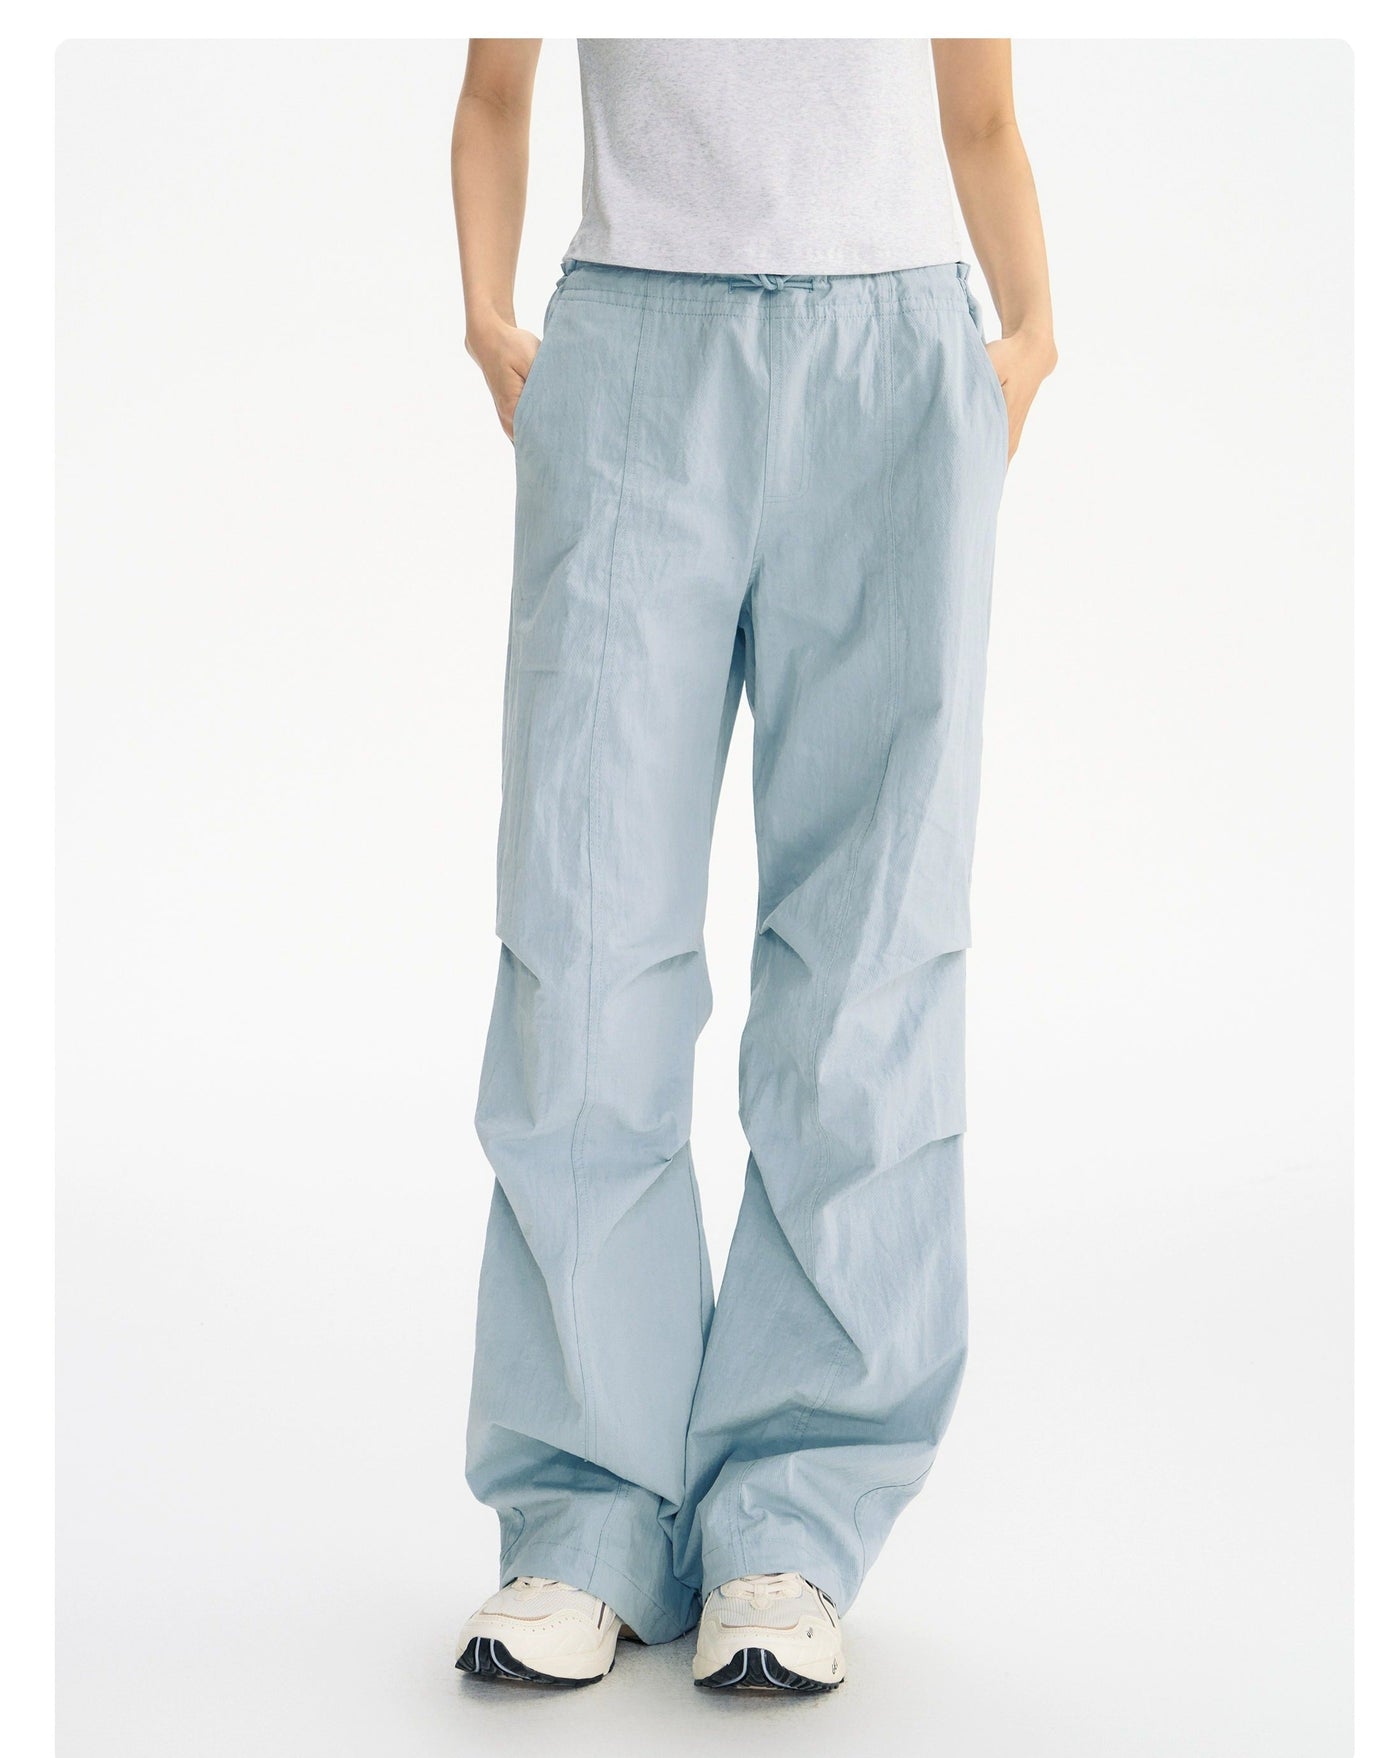 Gartered Loose Track Pants Korean Street Fashion Pants By WORKSOUT Shop Online at OH Vault